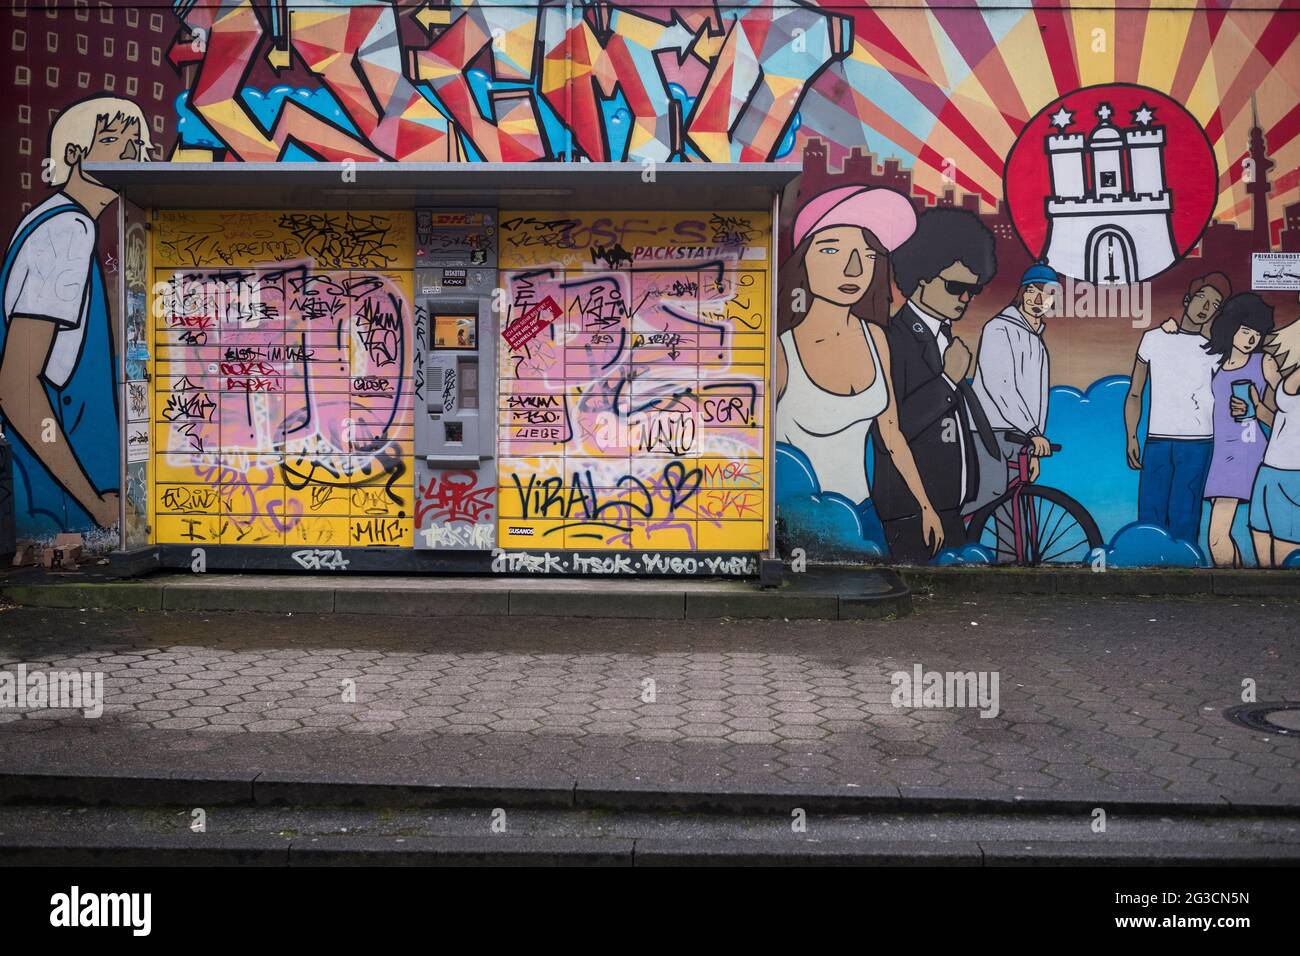 DHL Packstation, verziert mit Wandbild und Graffiti. Schanzenviertel, Hamburgo Foto de stock